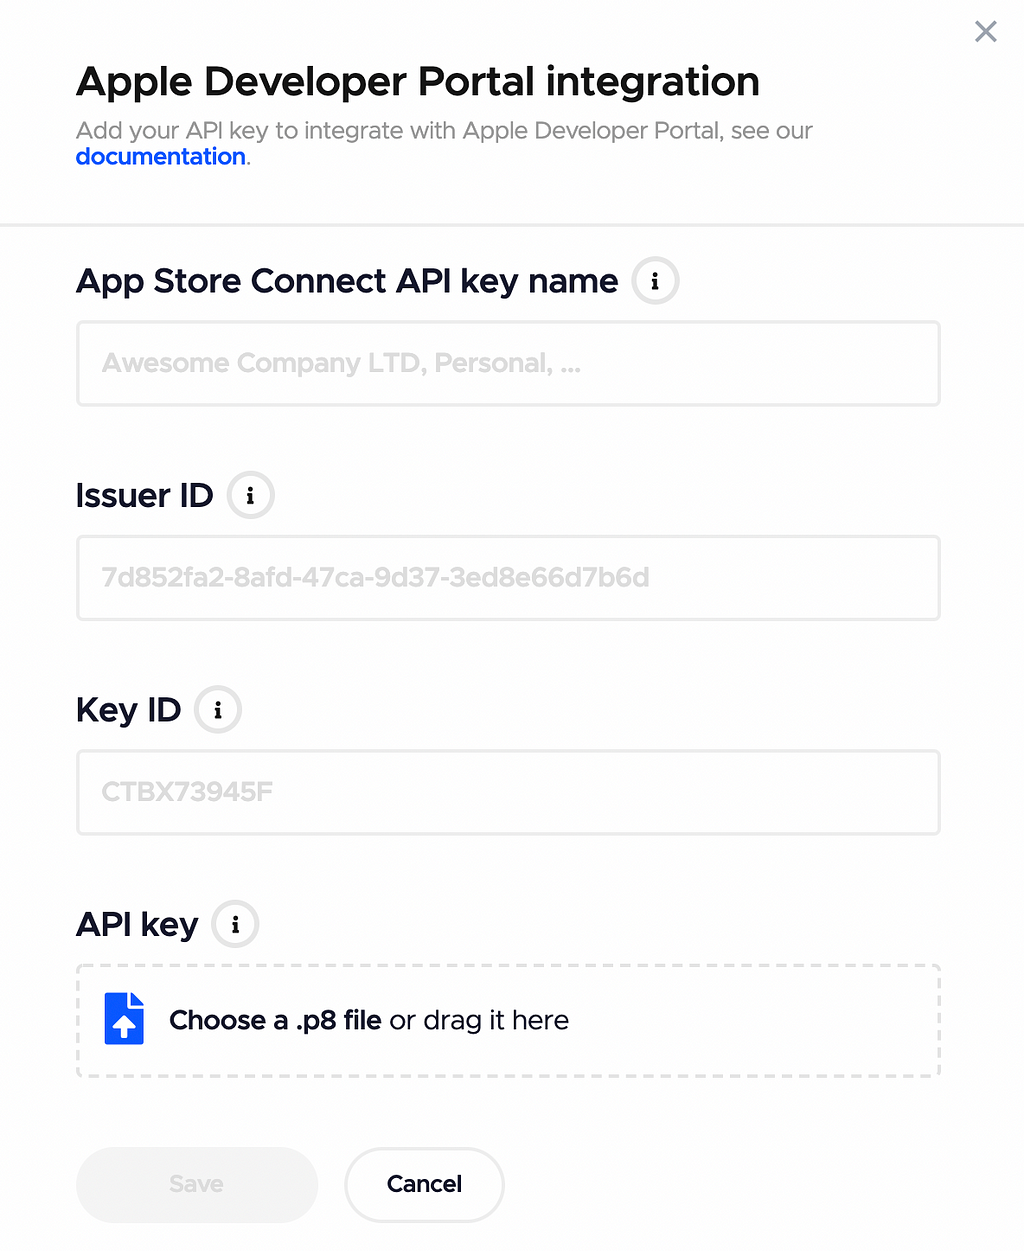 Adding a new App Store Connect API key